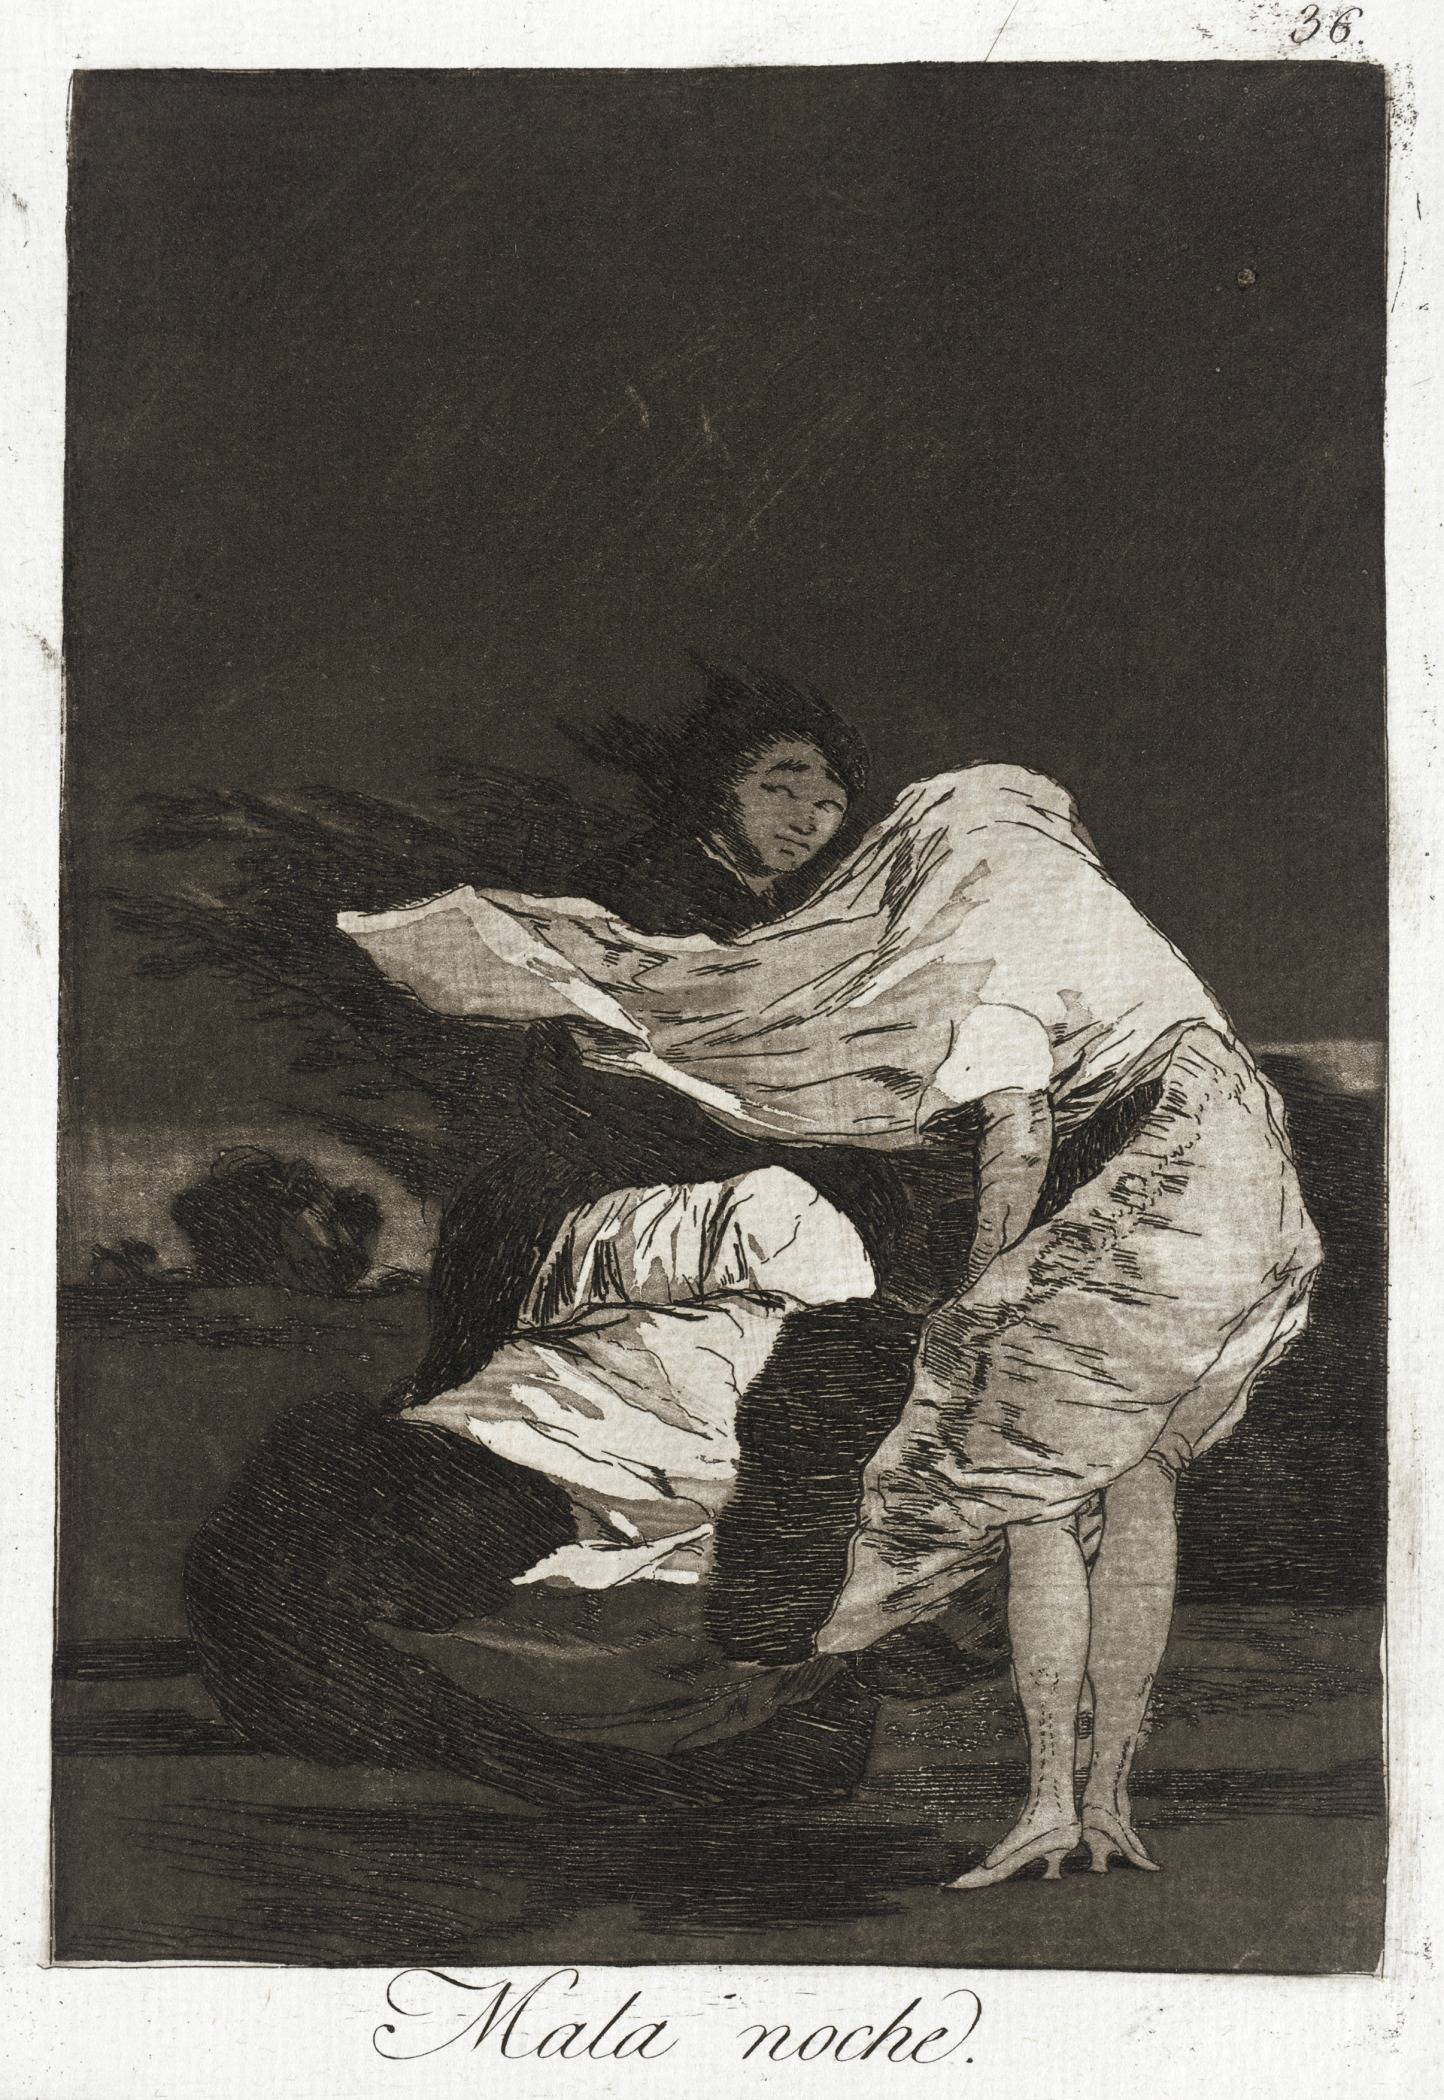 Francisco Goya y Lucientes (1799)